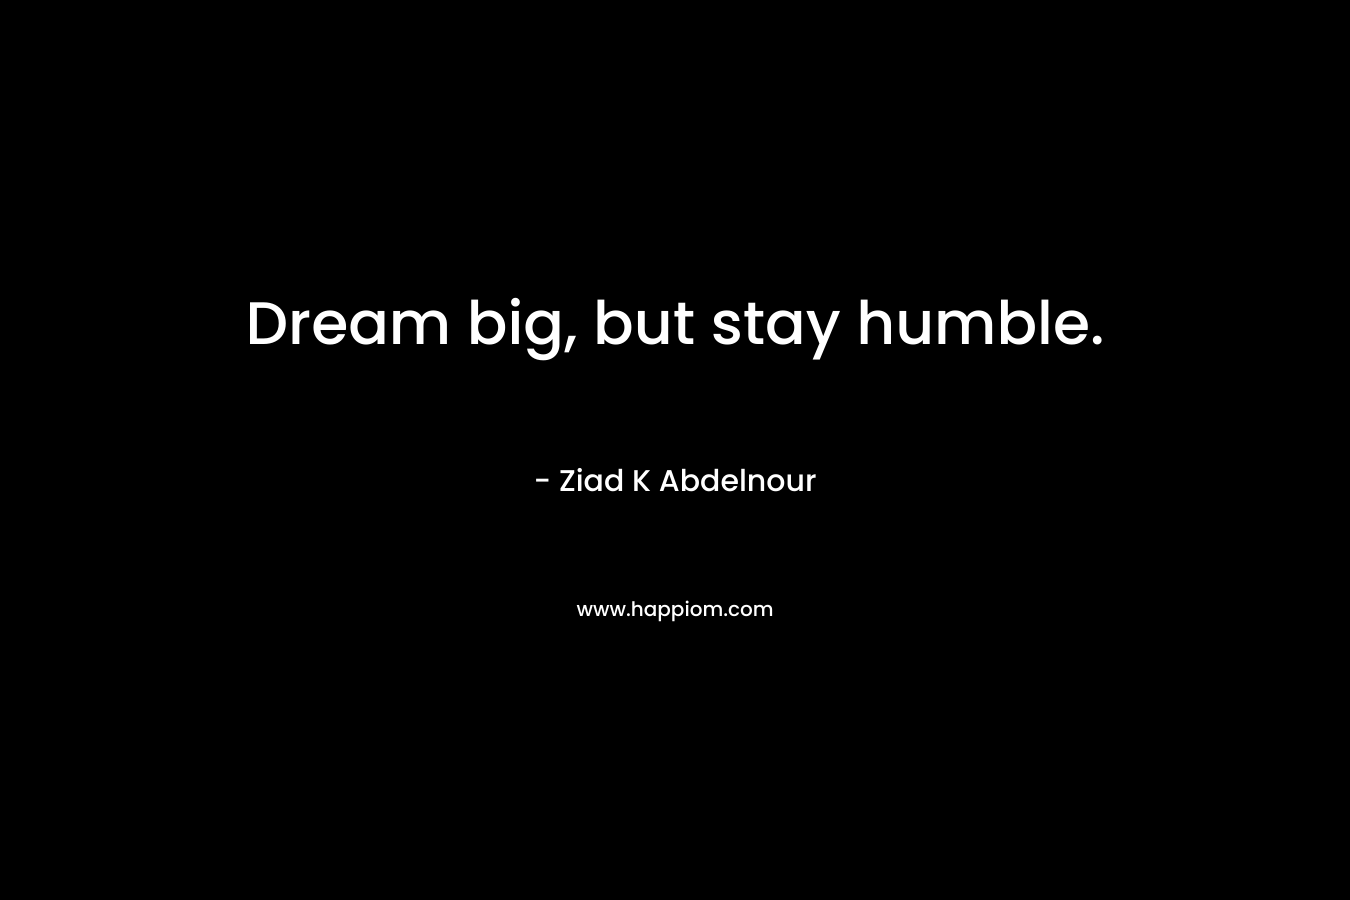 Dream big, but stay humble.